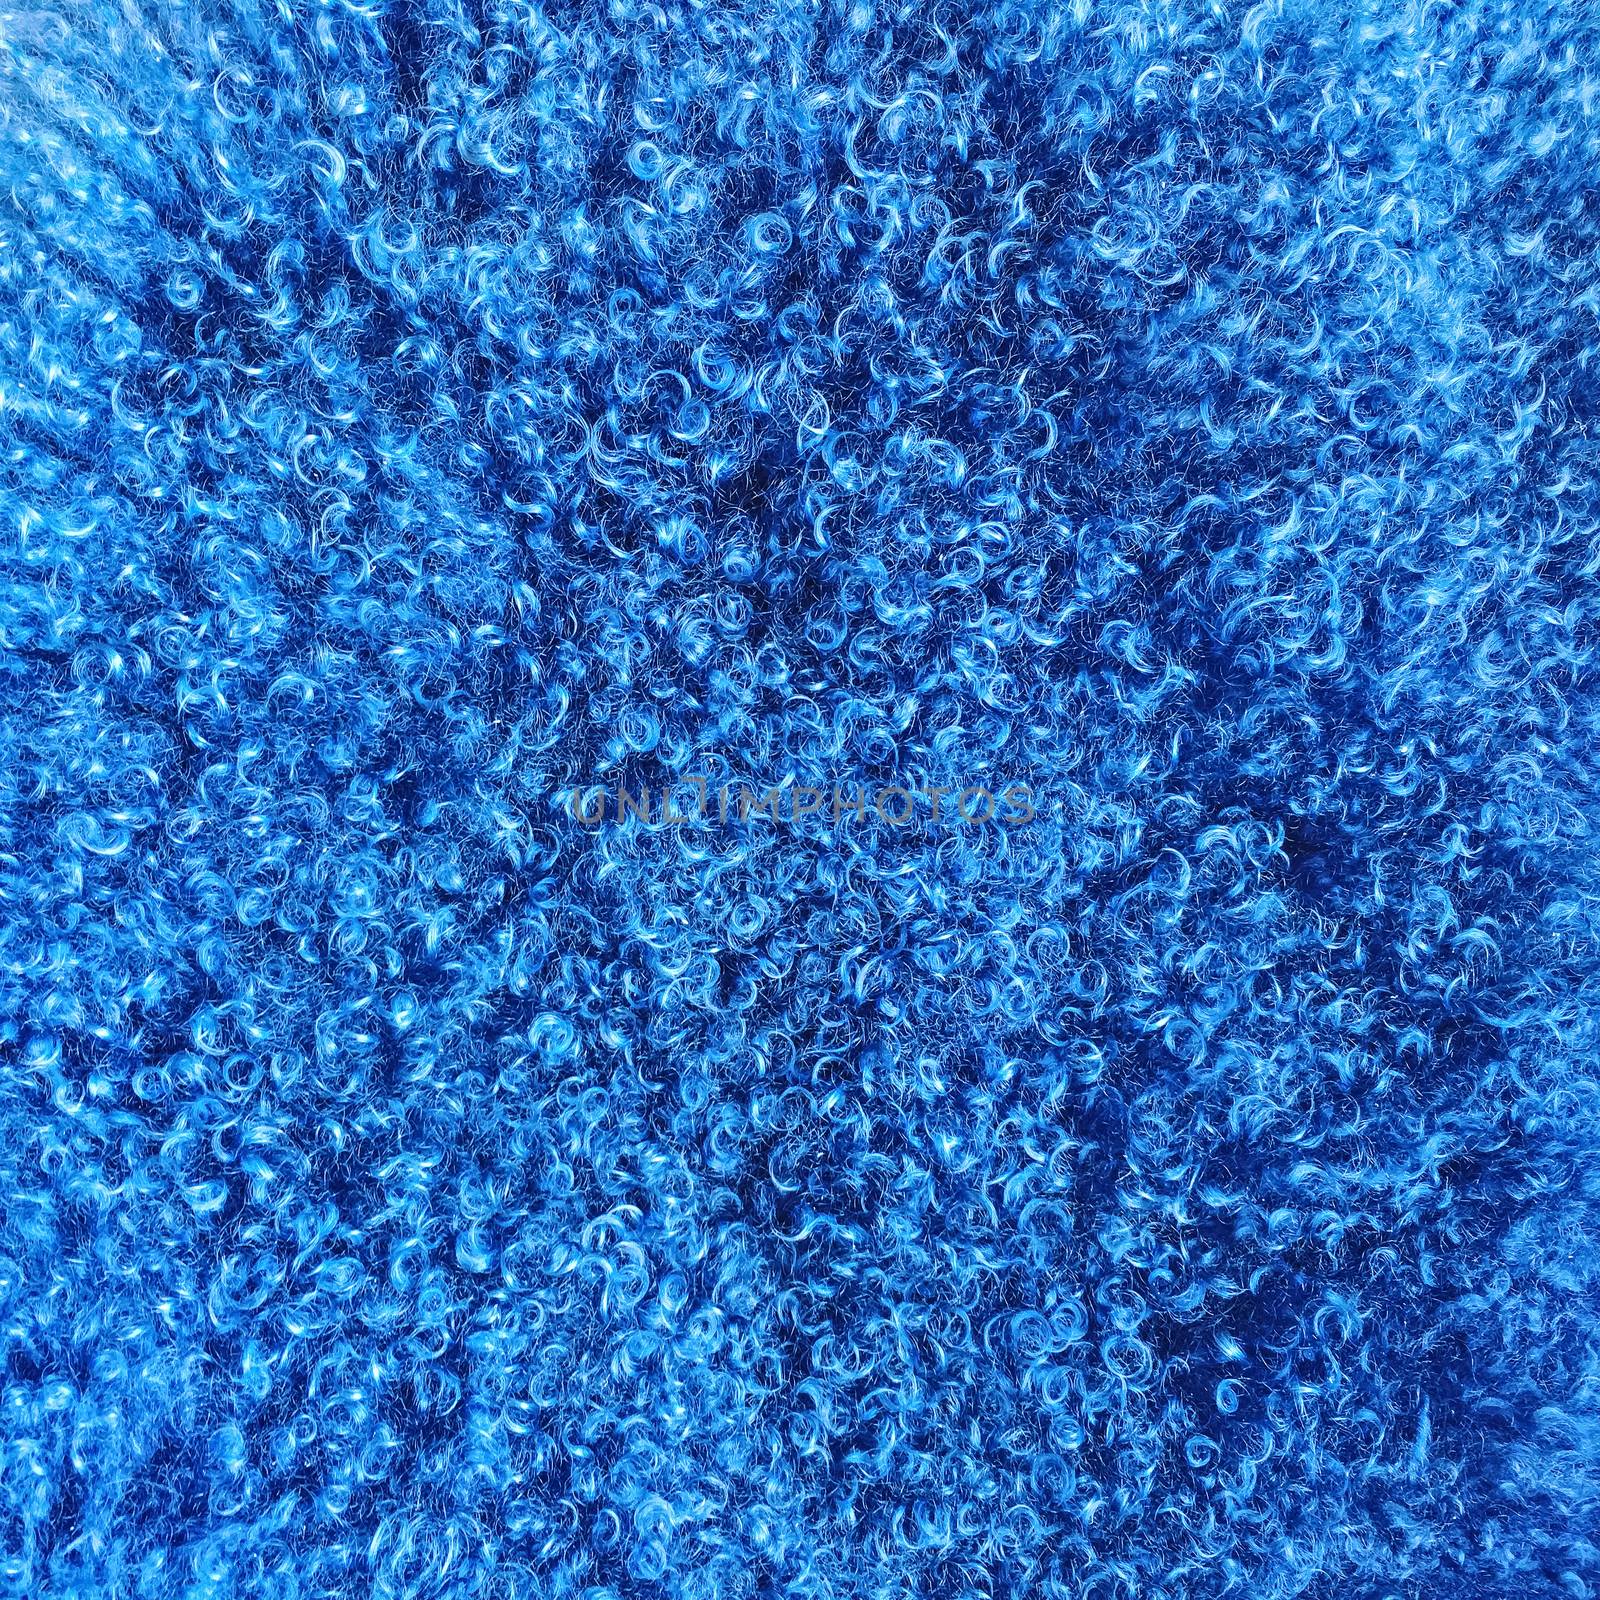 Blue sheepskin background by anikasalsera